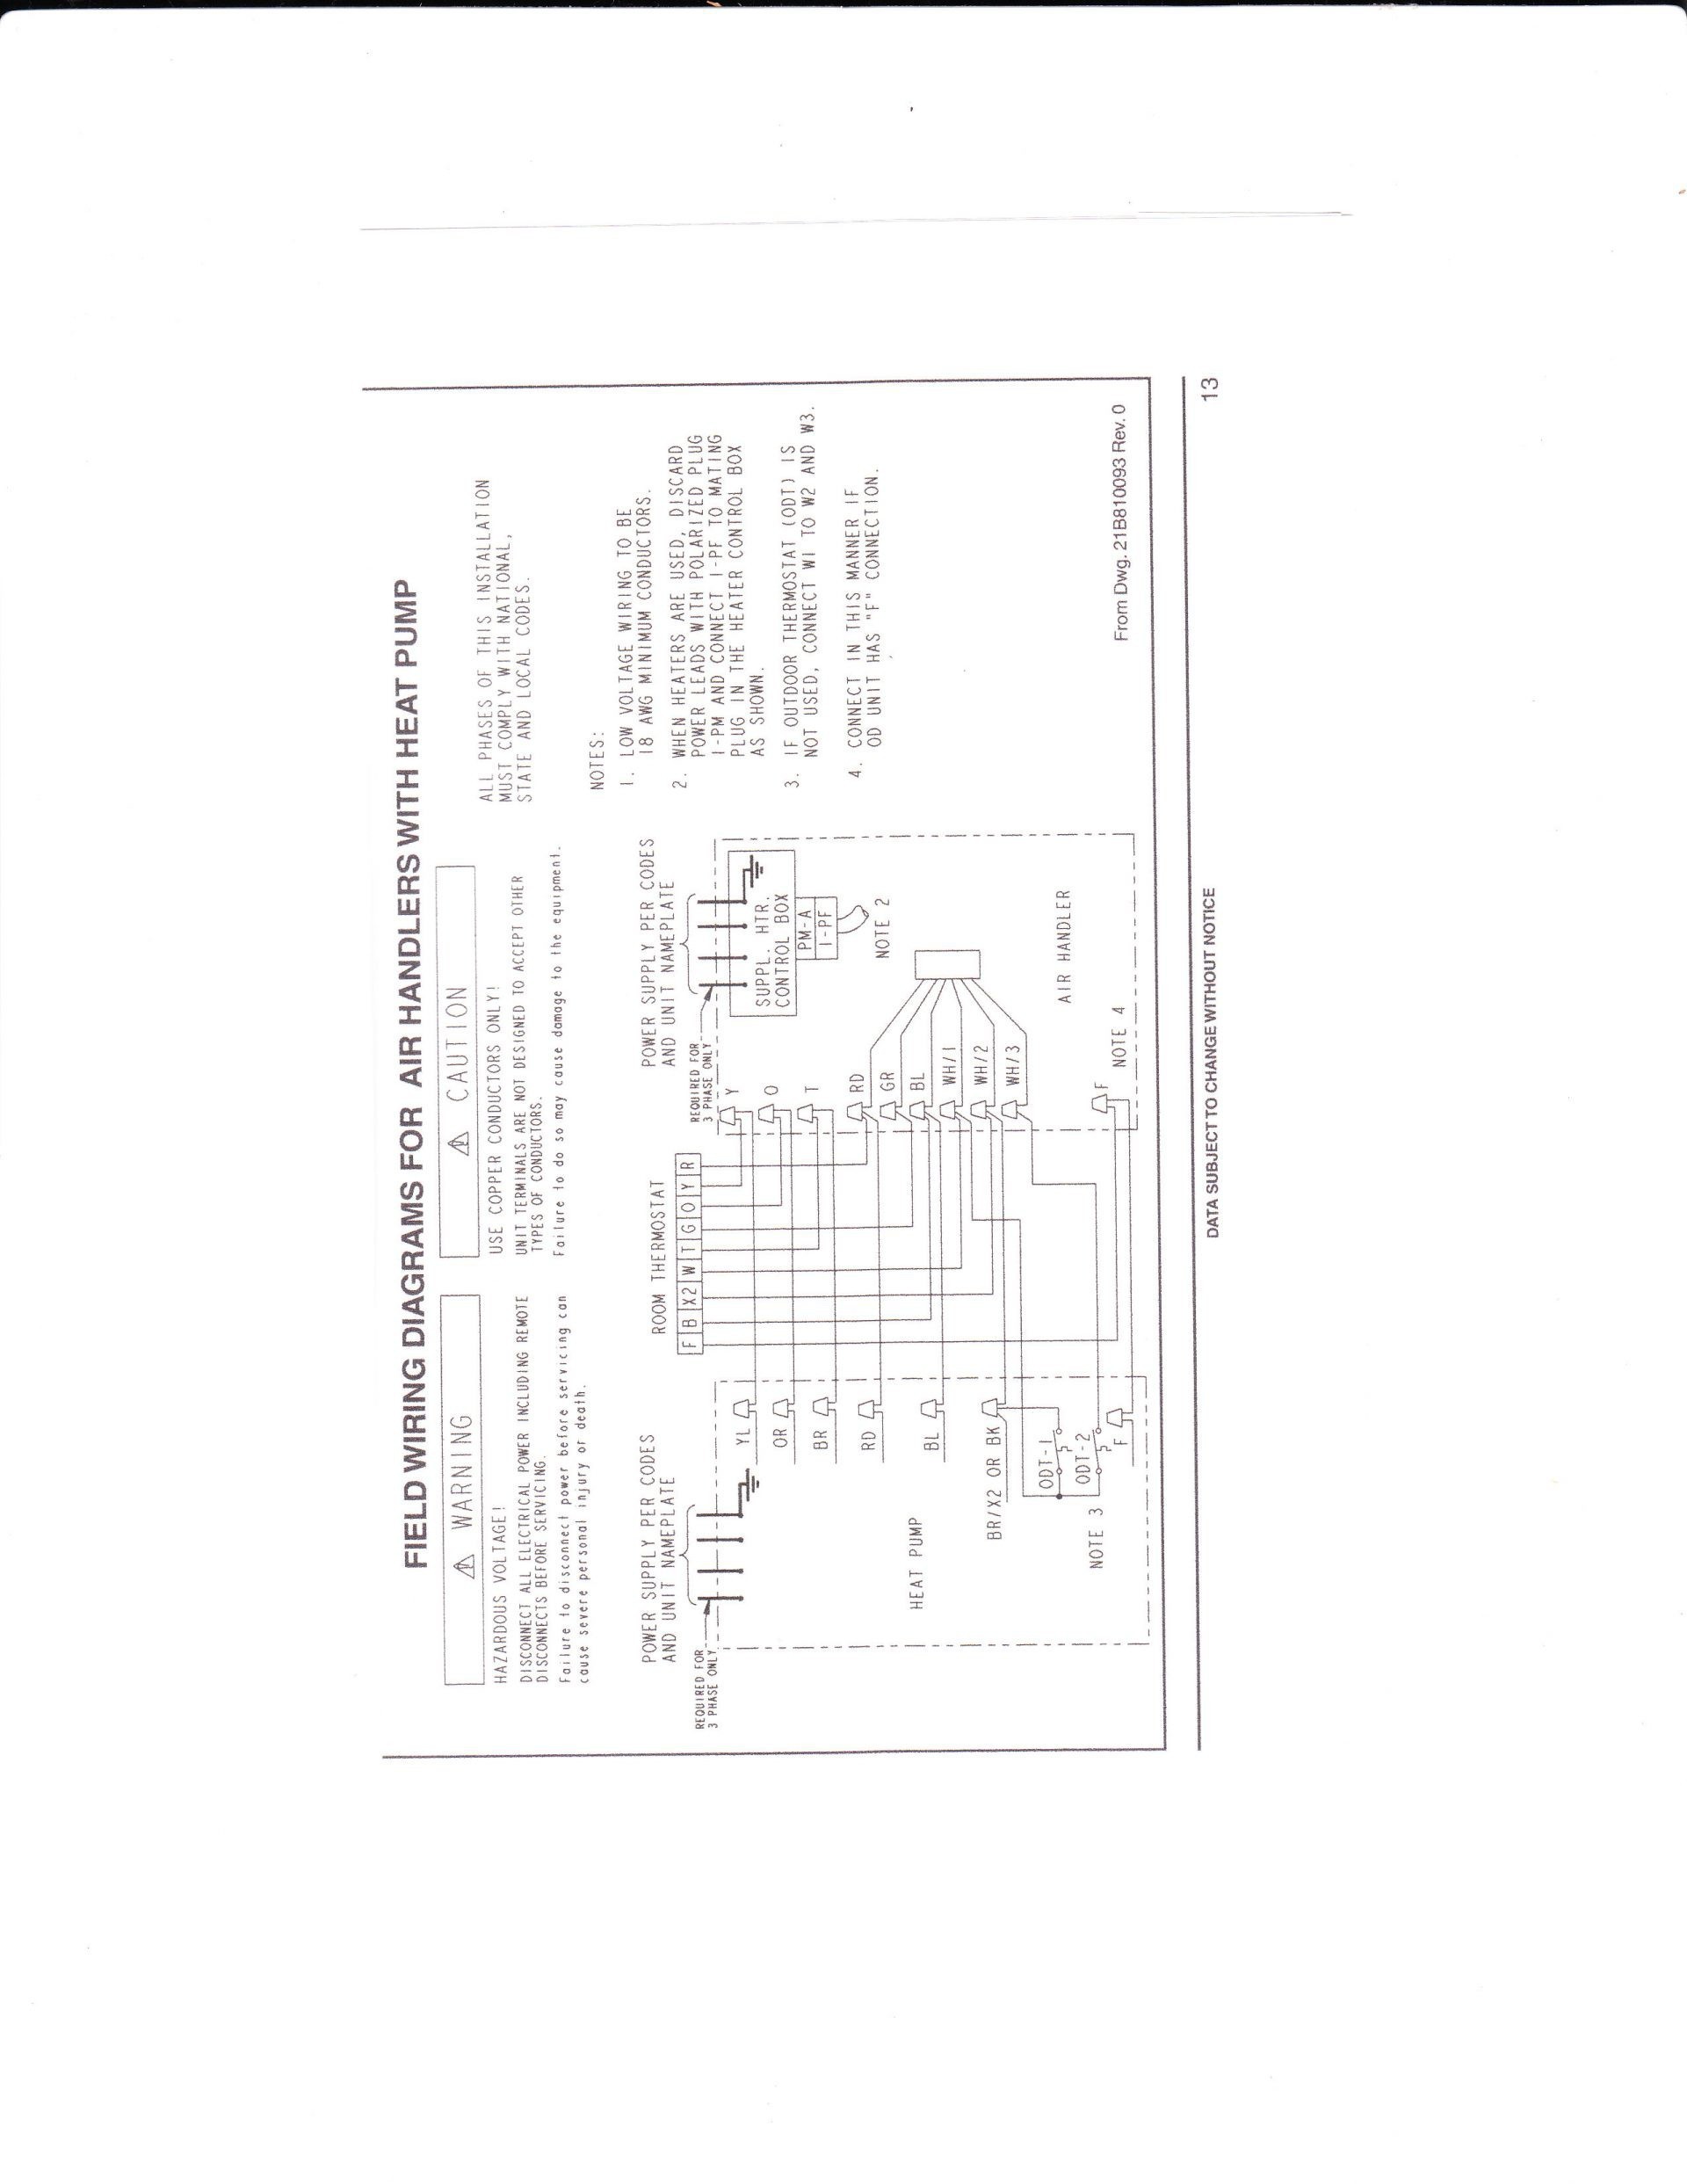 Trane Xl1200 Heat Pump Wiring Diagram Wiring Diagram Alarm Mobil Valid Trane Xl1200 Heat Pump Wiring Of Trane Xl1200 Heat Pump Wiring Diagram